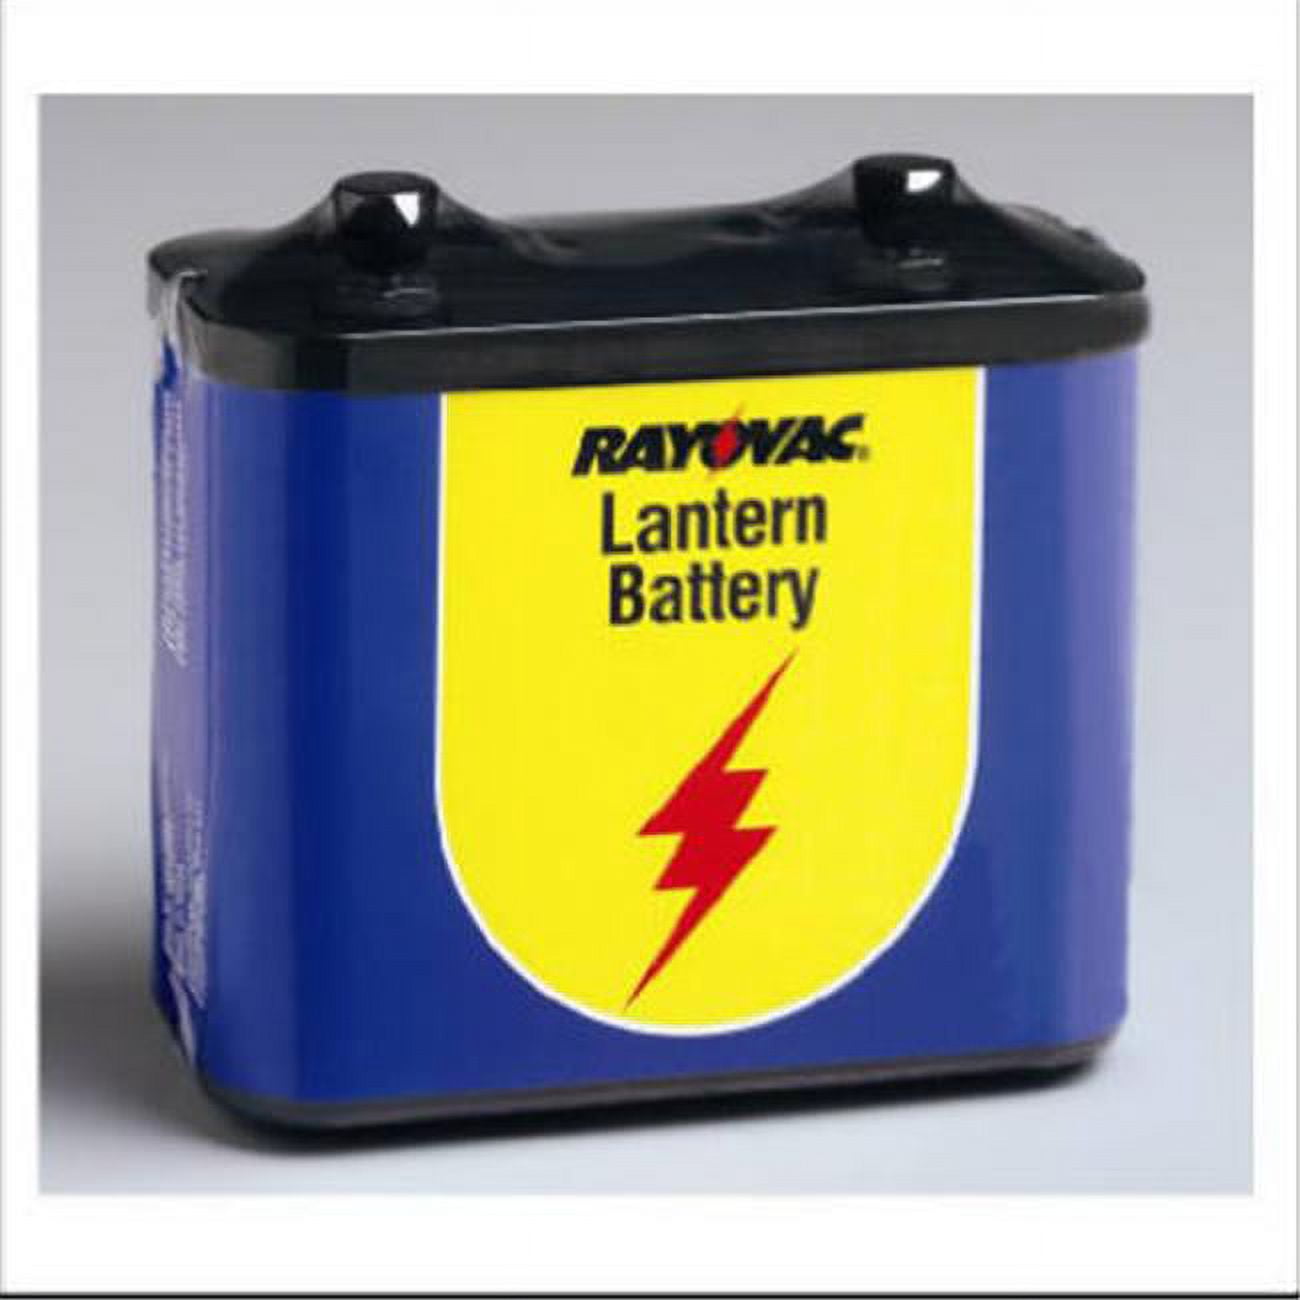 Buy Rayovac General Purpose 6V Screw Terminal Zinc Lantern Battery